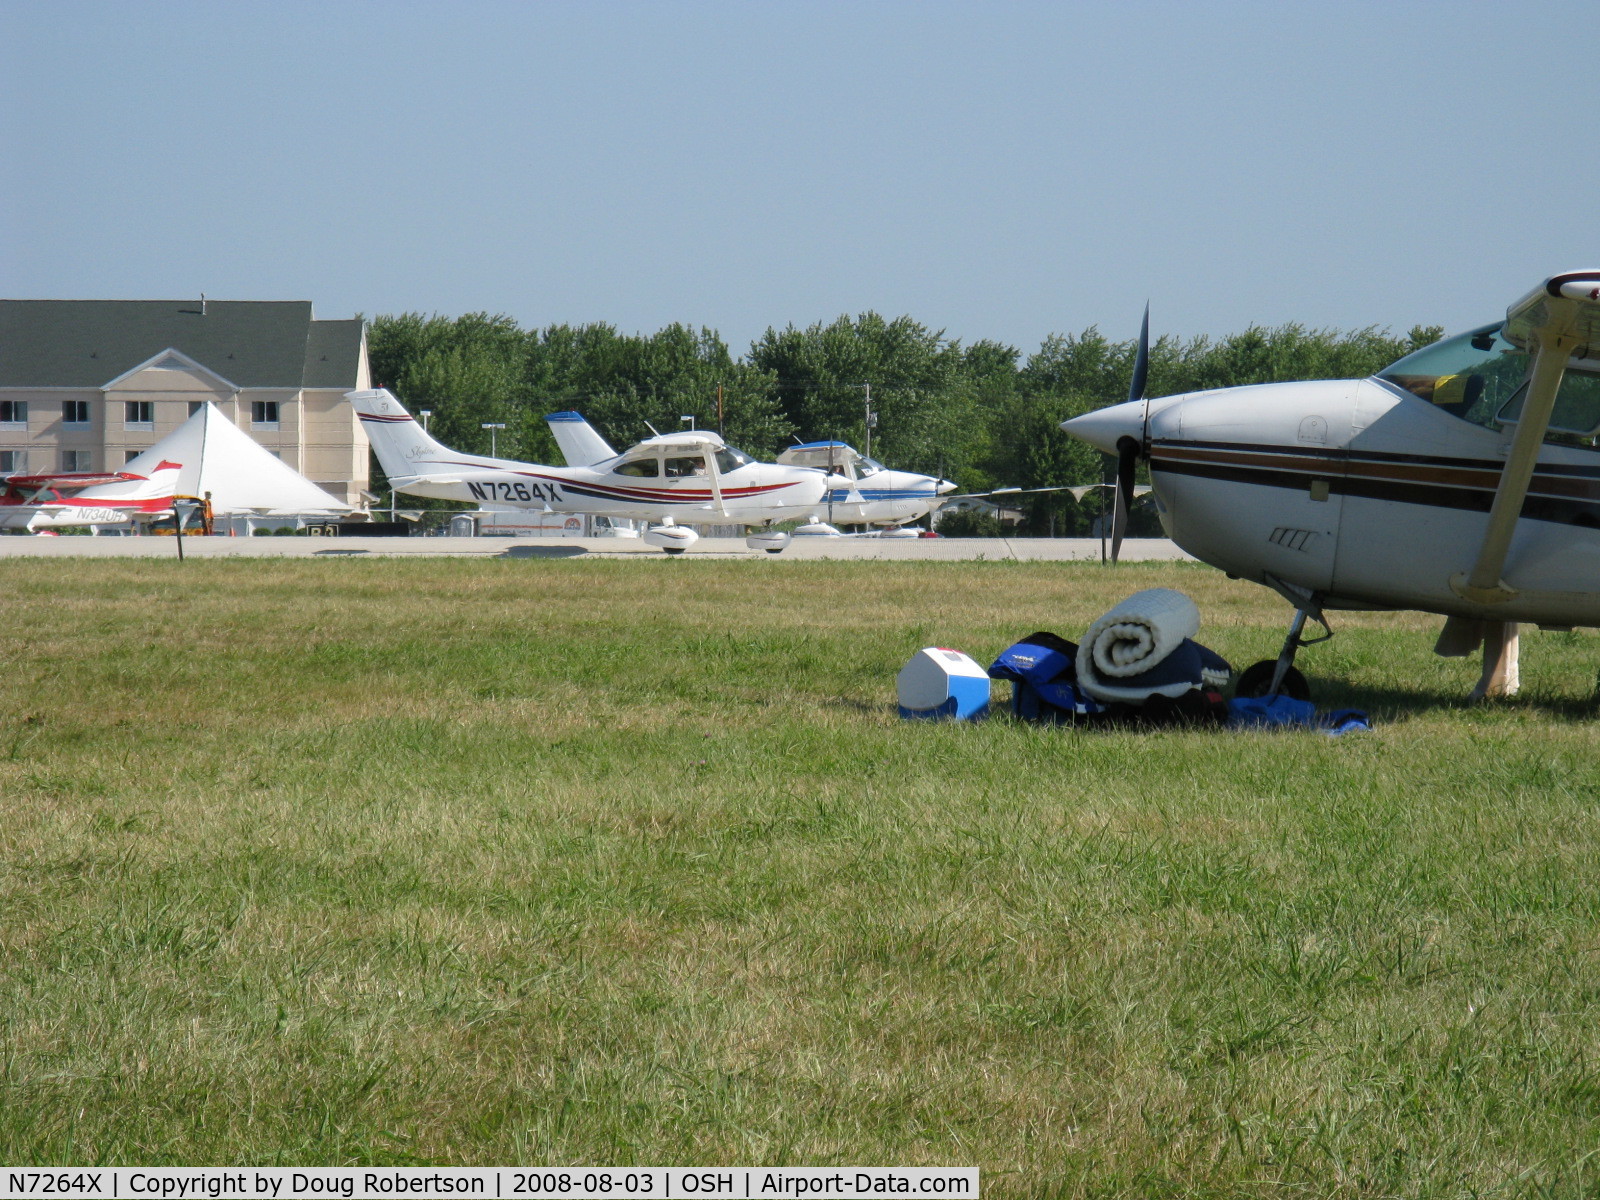 N7264X, 1999 Cessna 182S Skylane C/N 18280598, 1999 Cessna 182S SKYLANE, Lycoming IO-540-AB1A5 230 Hp, takeoff roll Rwy 09